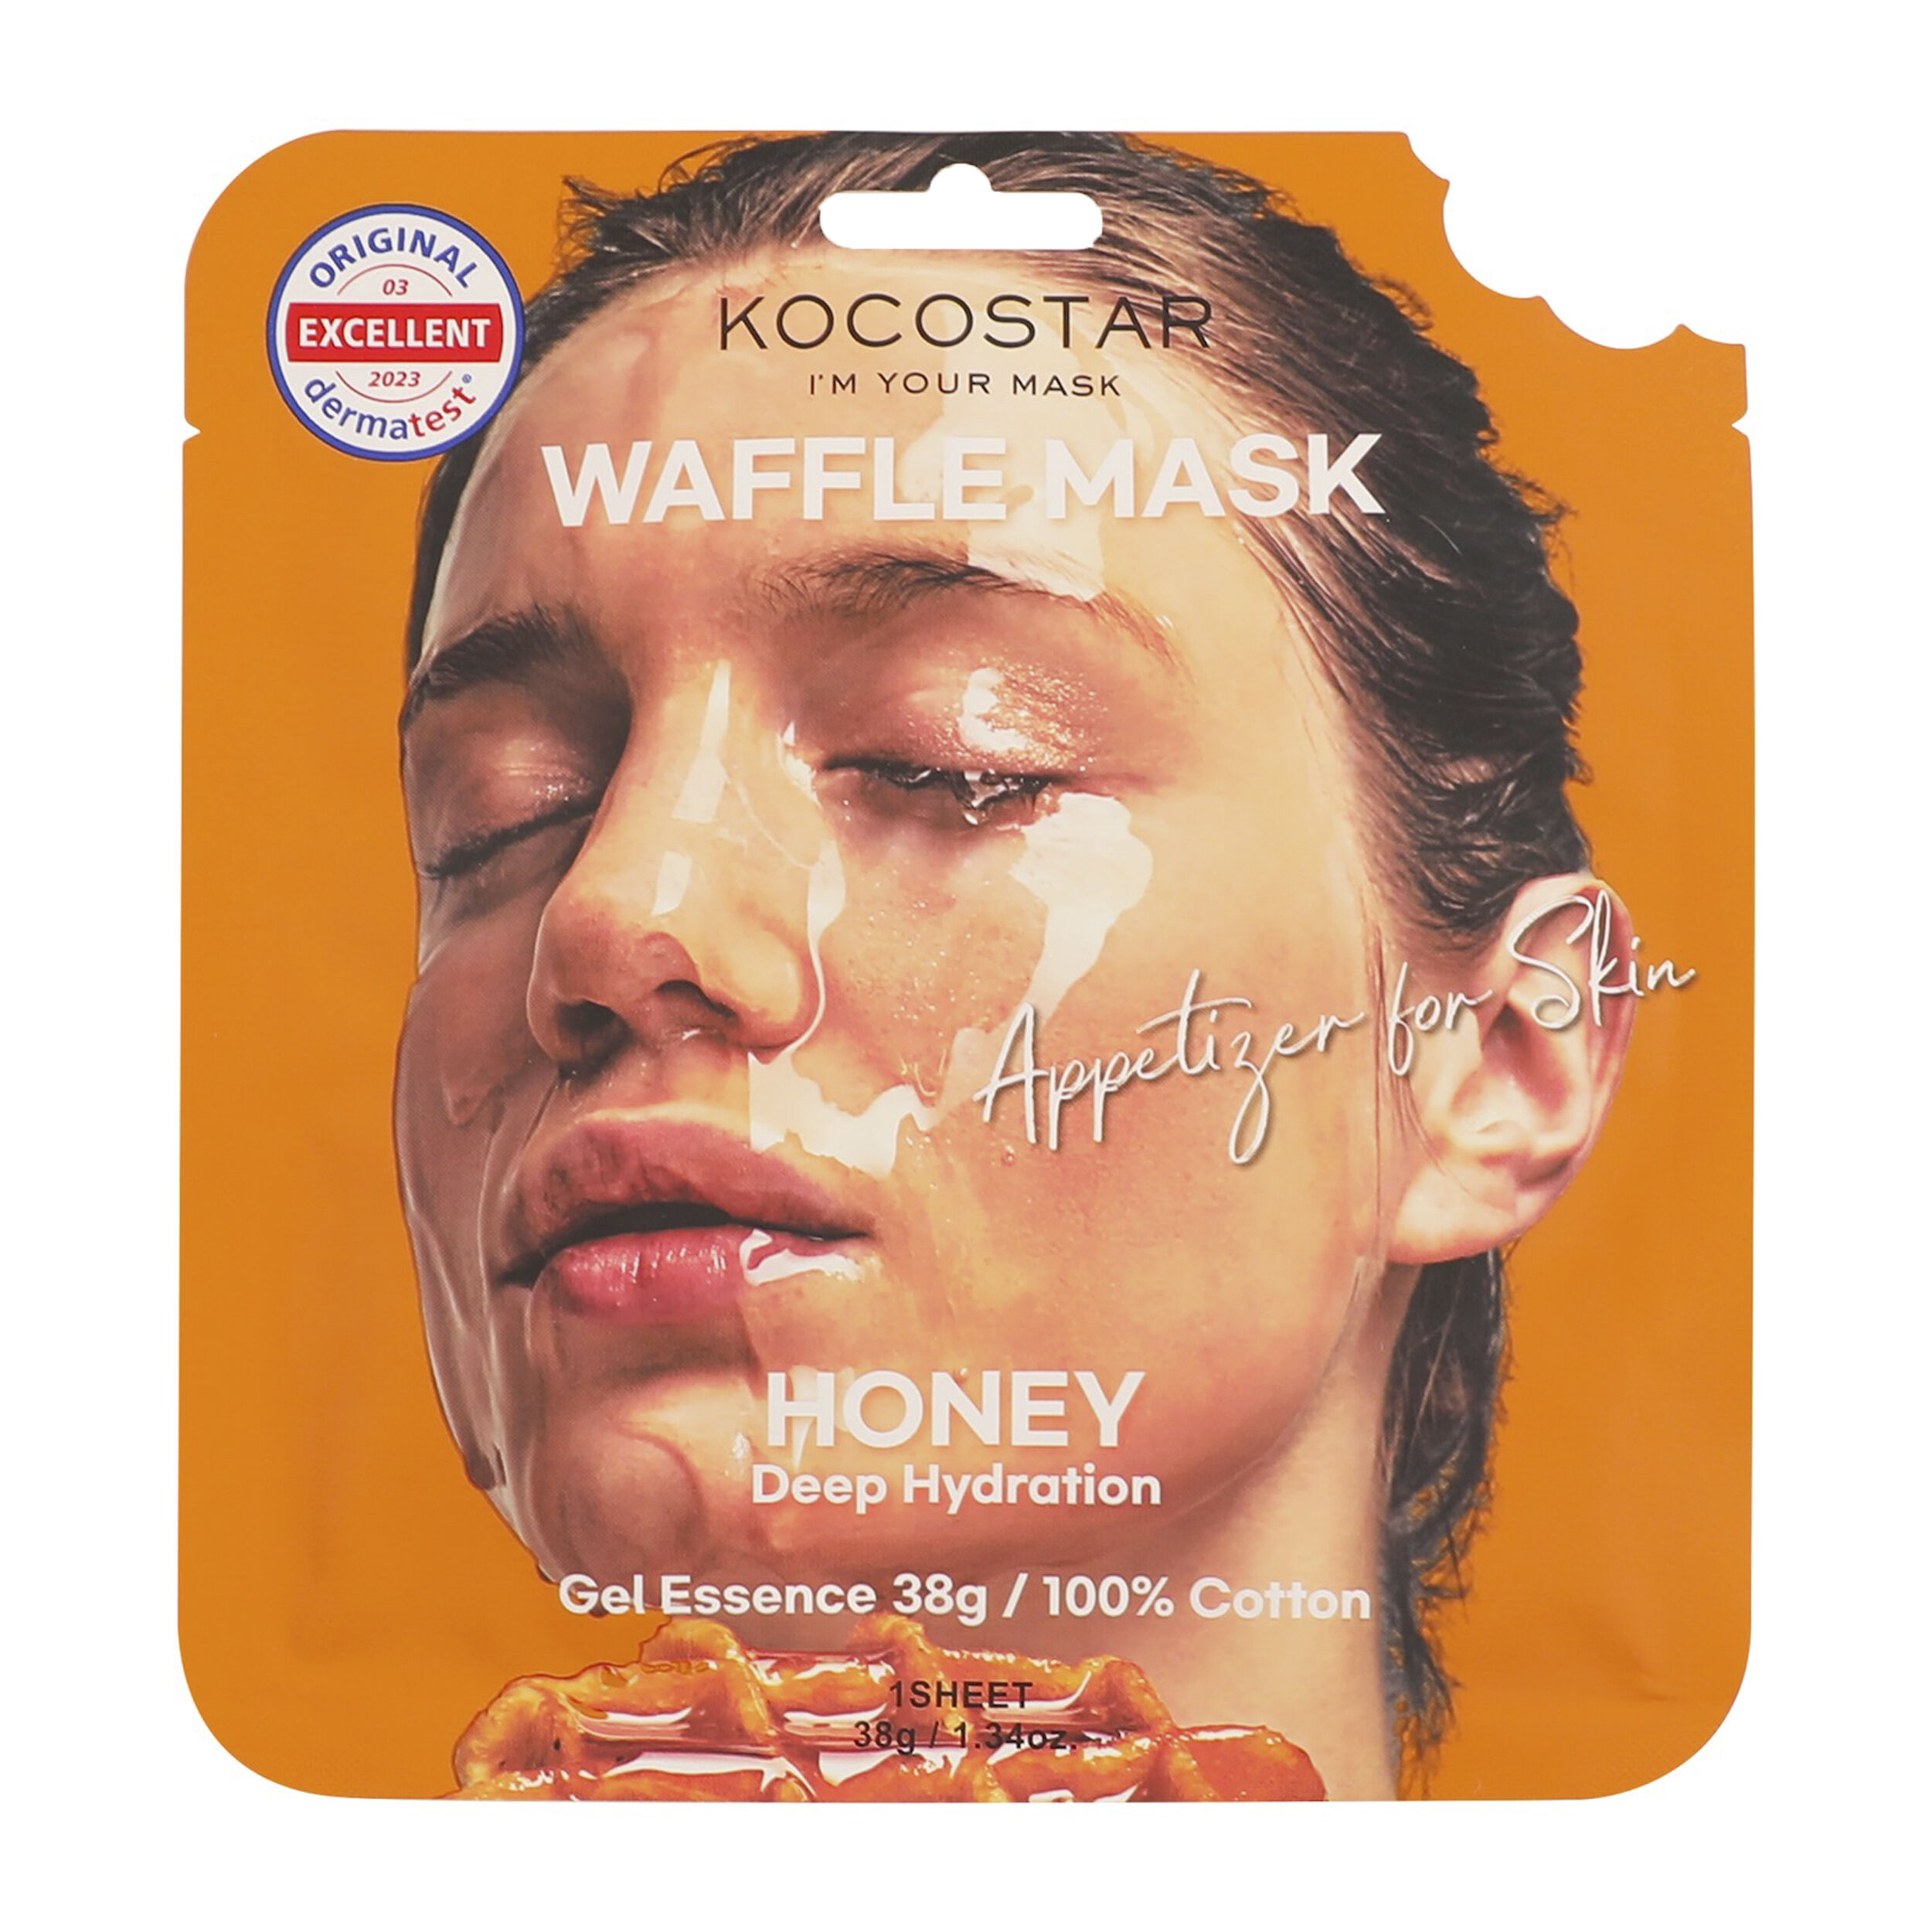 Медовая маска для лица Kocostar Waffle Mask, 38 гр цена и фото